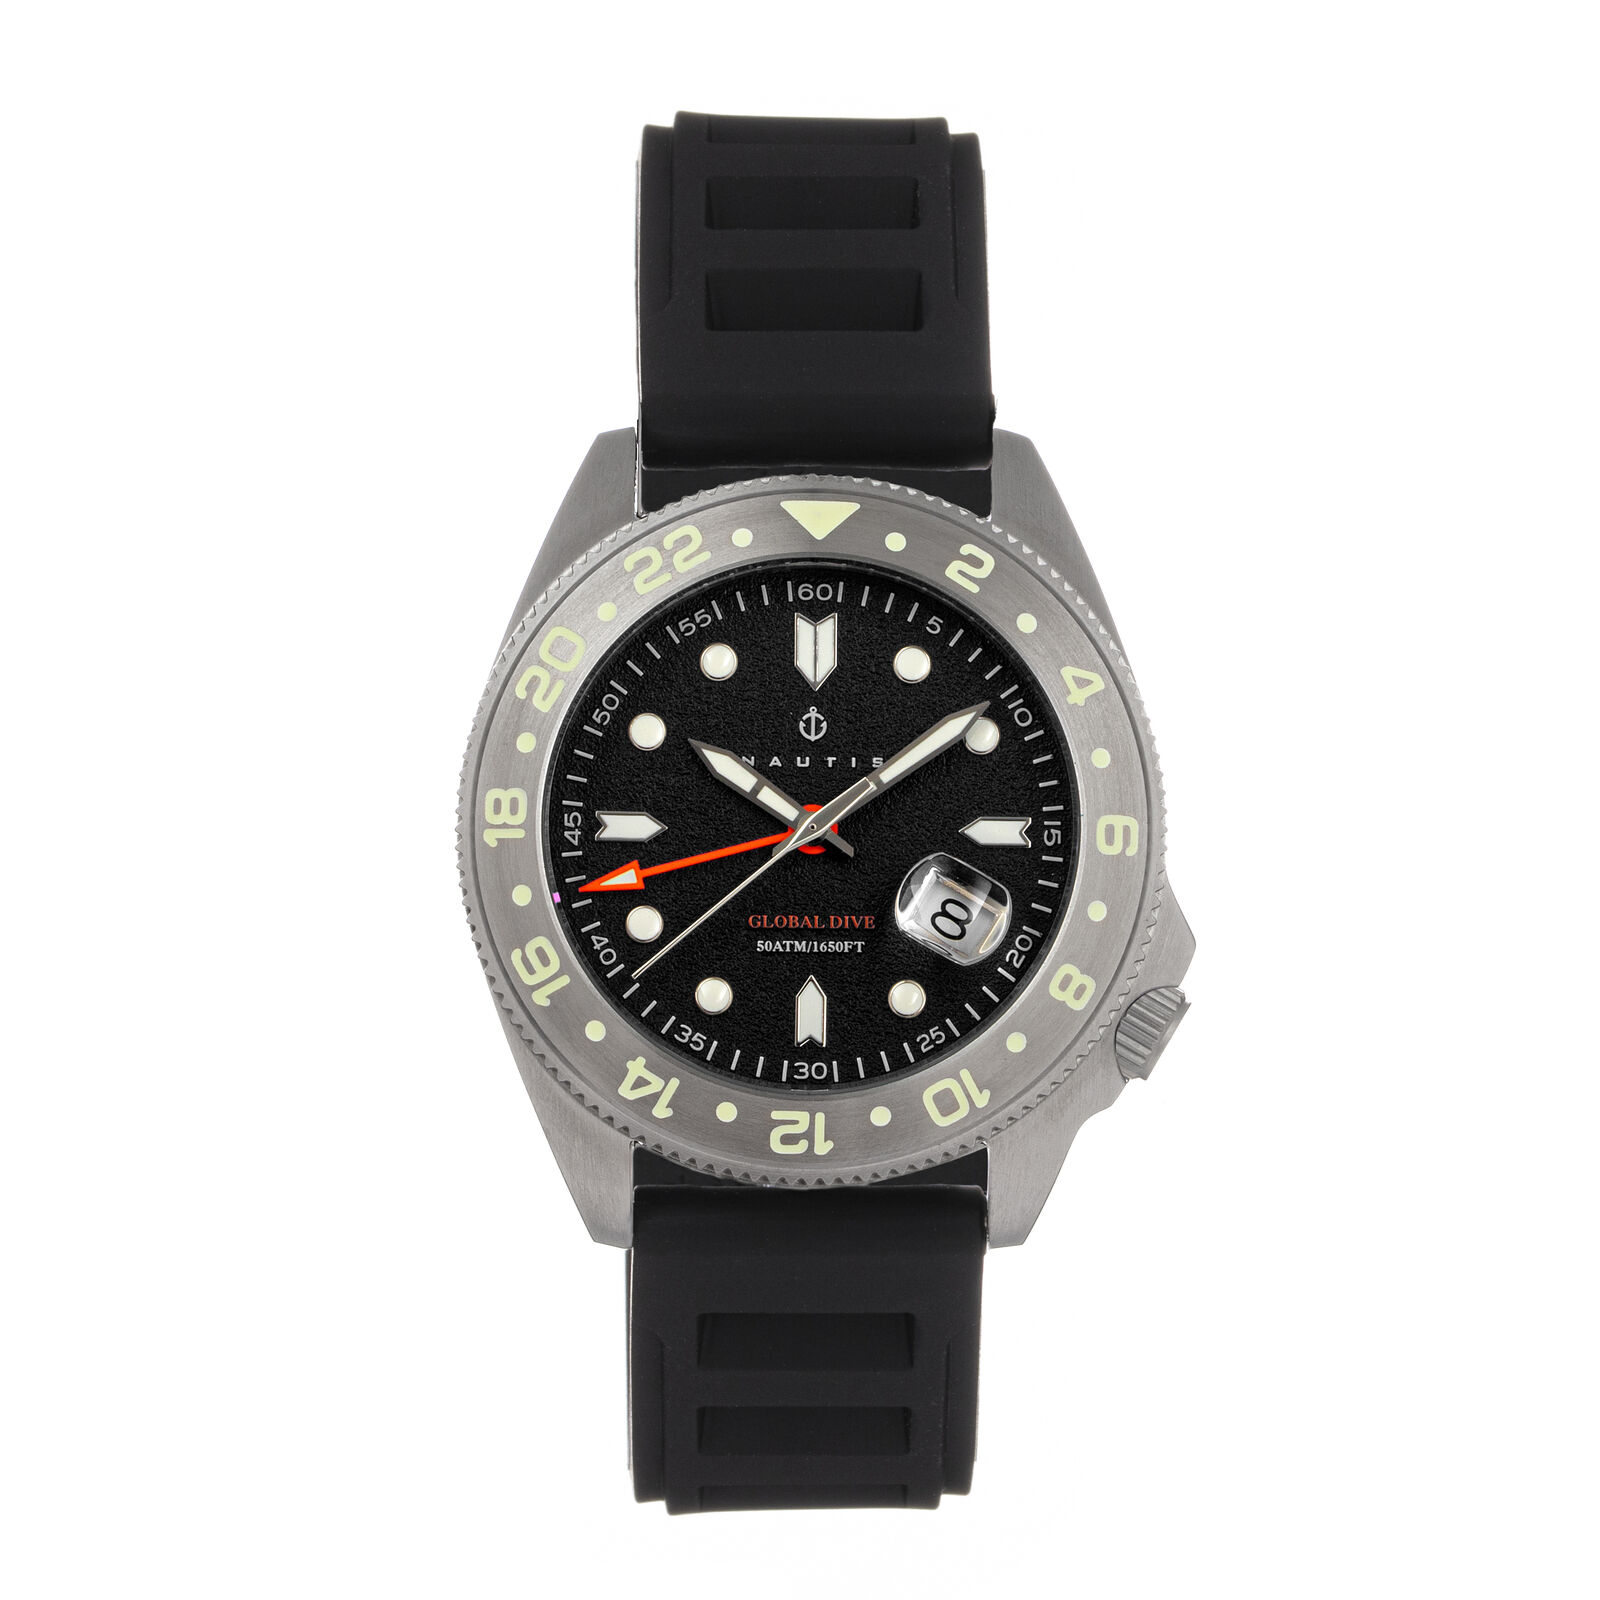 Nautis Global Dive Rubber-Strap Watch w/Date - Black